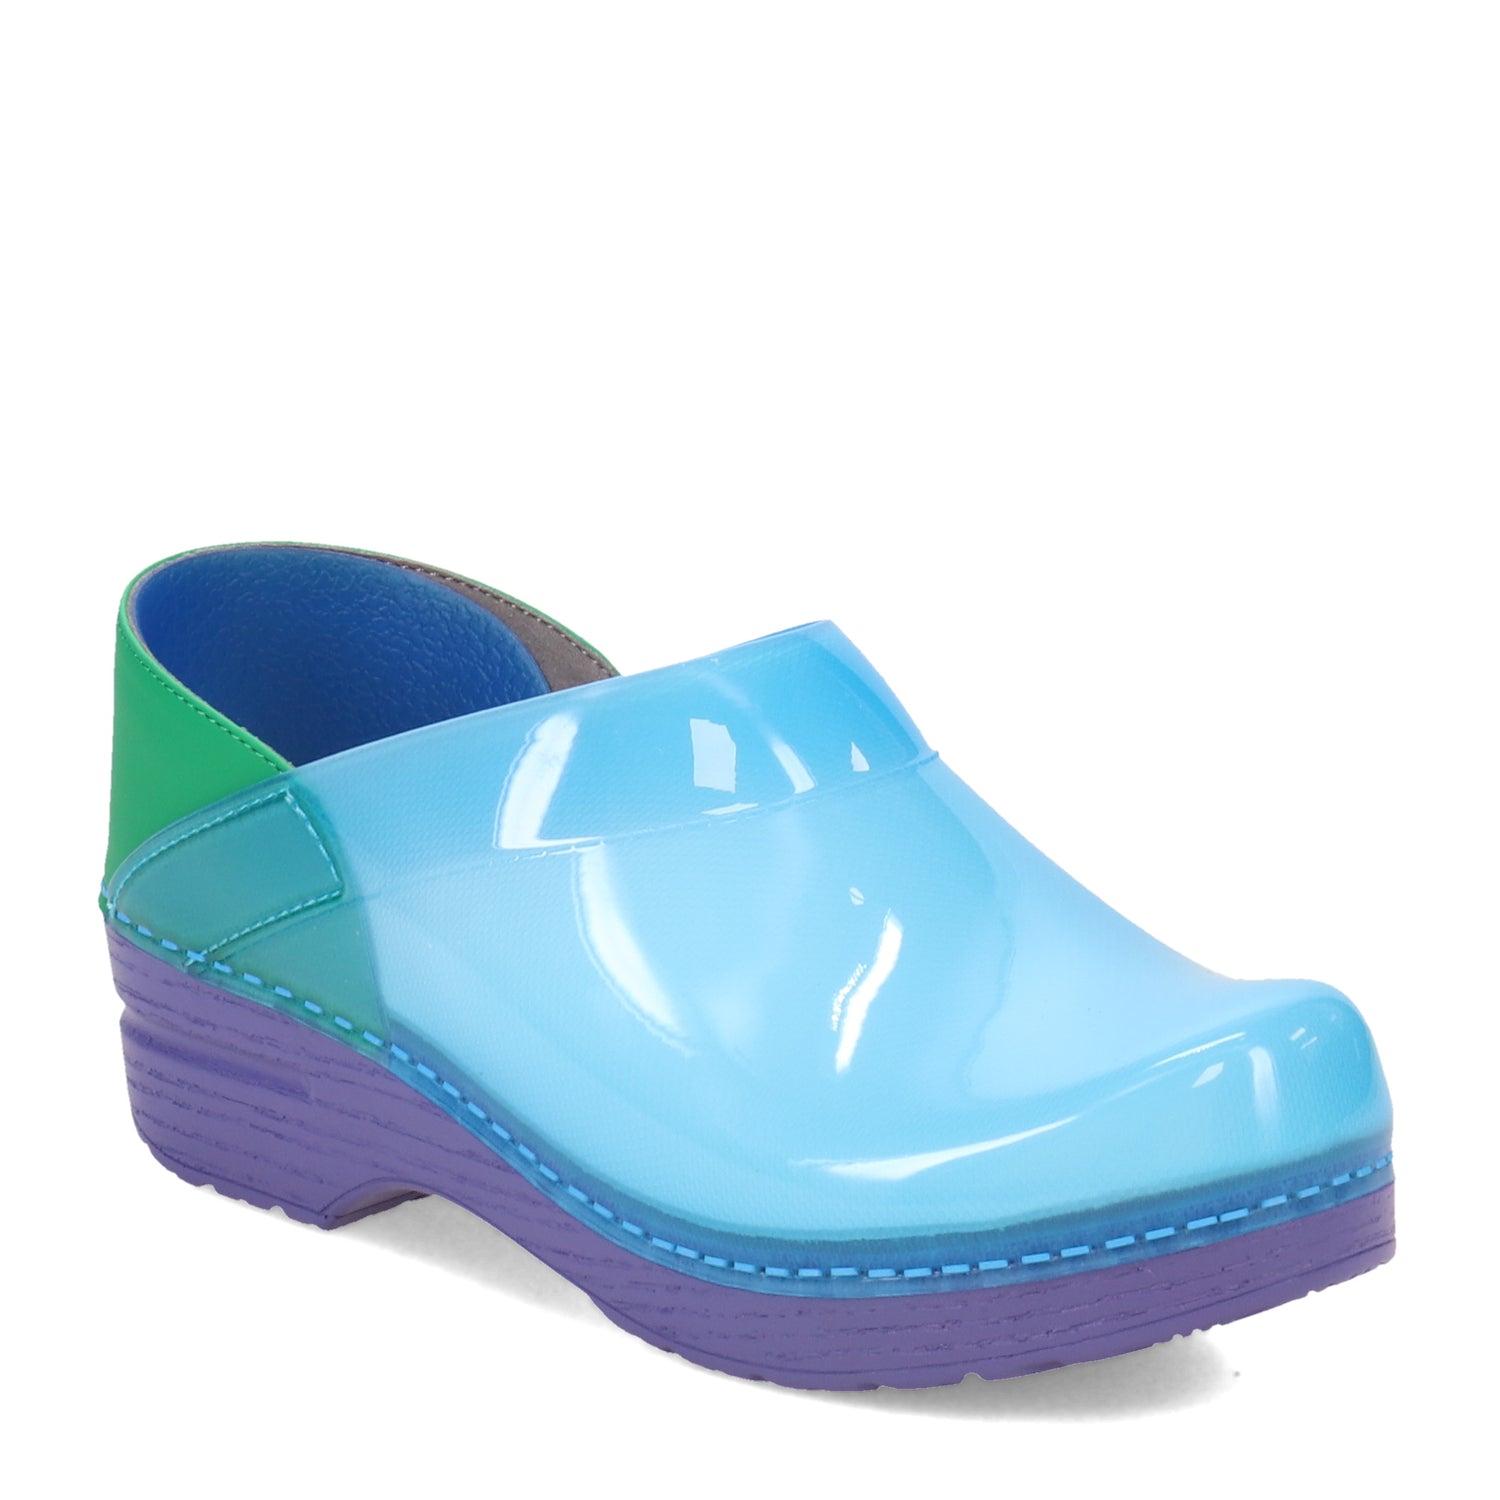 Peltz Shoes  Women's Dansko Professional Clog Blue 006-544933